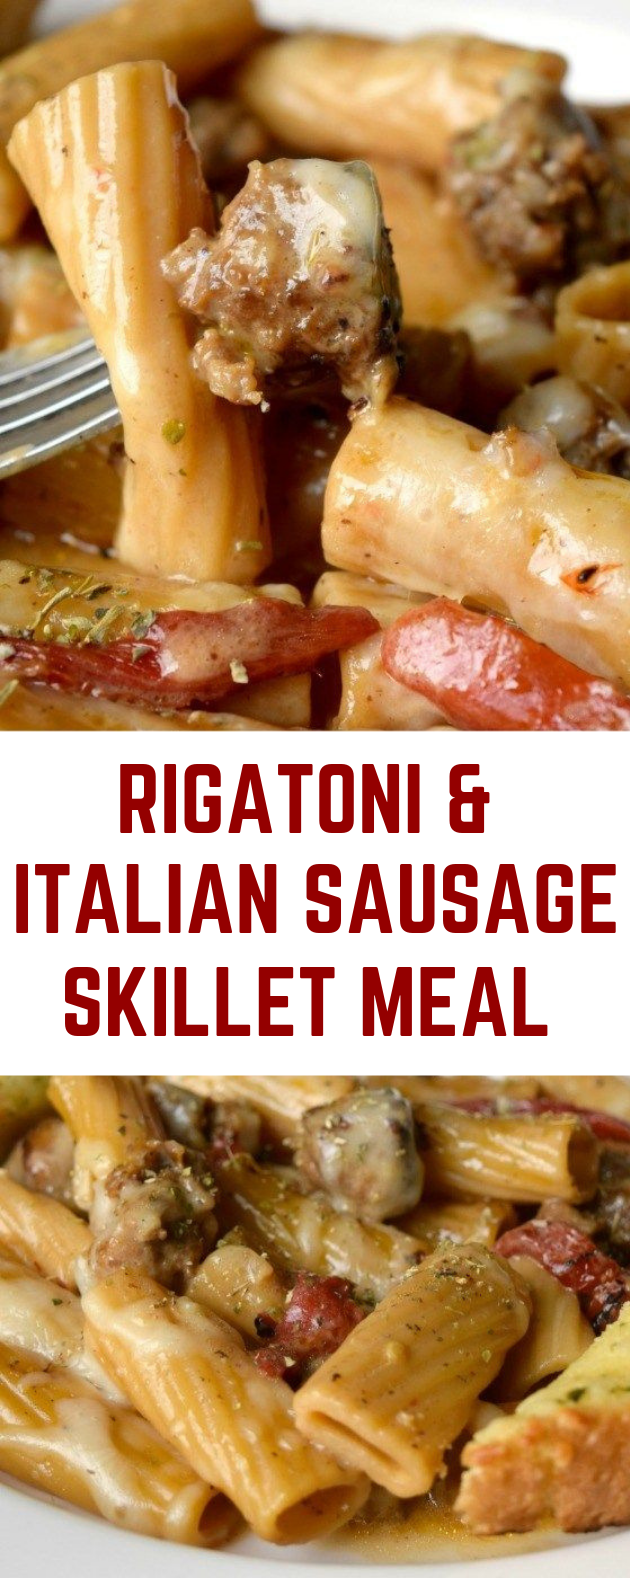 Rigatoni & Italian Sausage Skillet Meal #Recipe #Meal